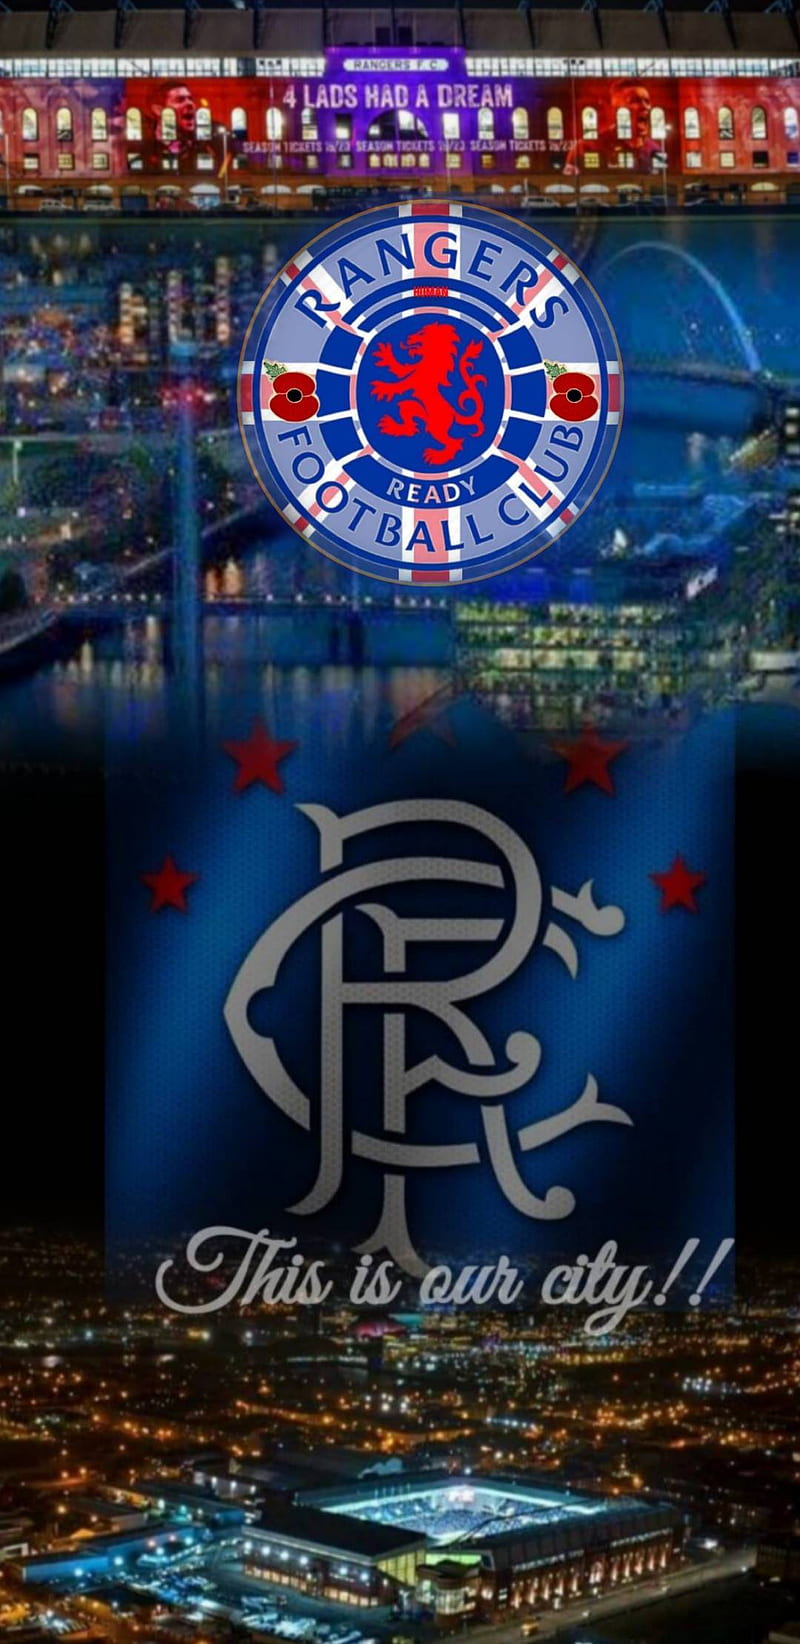 Rangers fc our city, football, fourladshadadream, glasgow, rangers fc, HD phone wallpaper